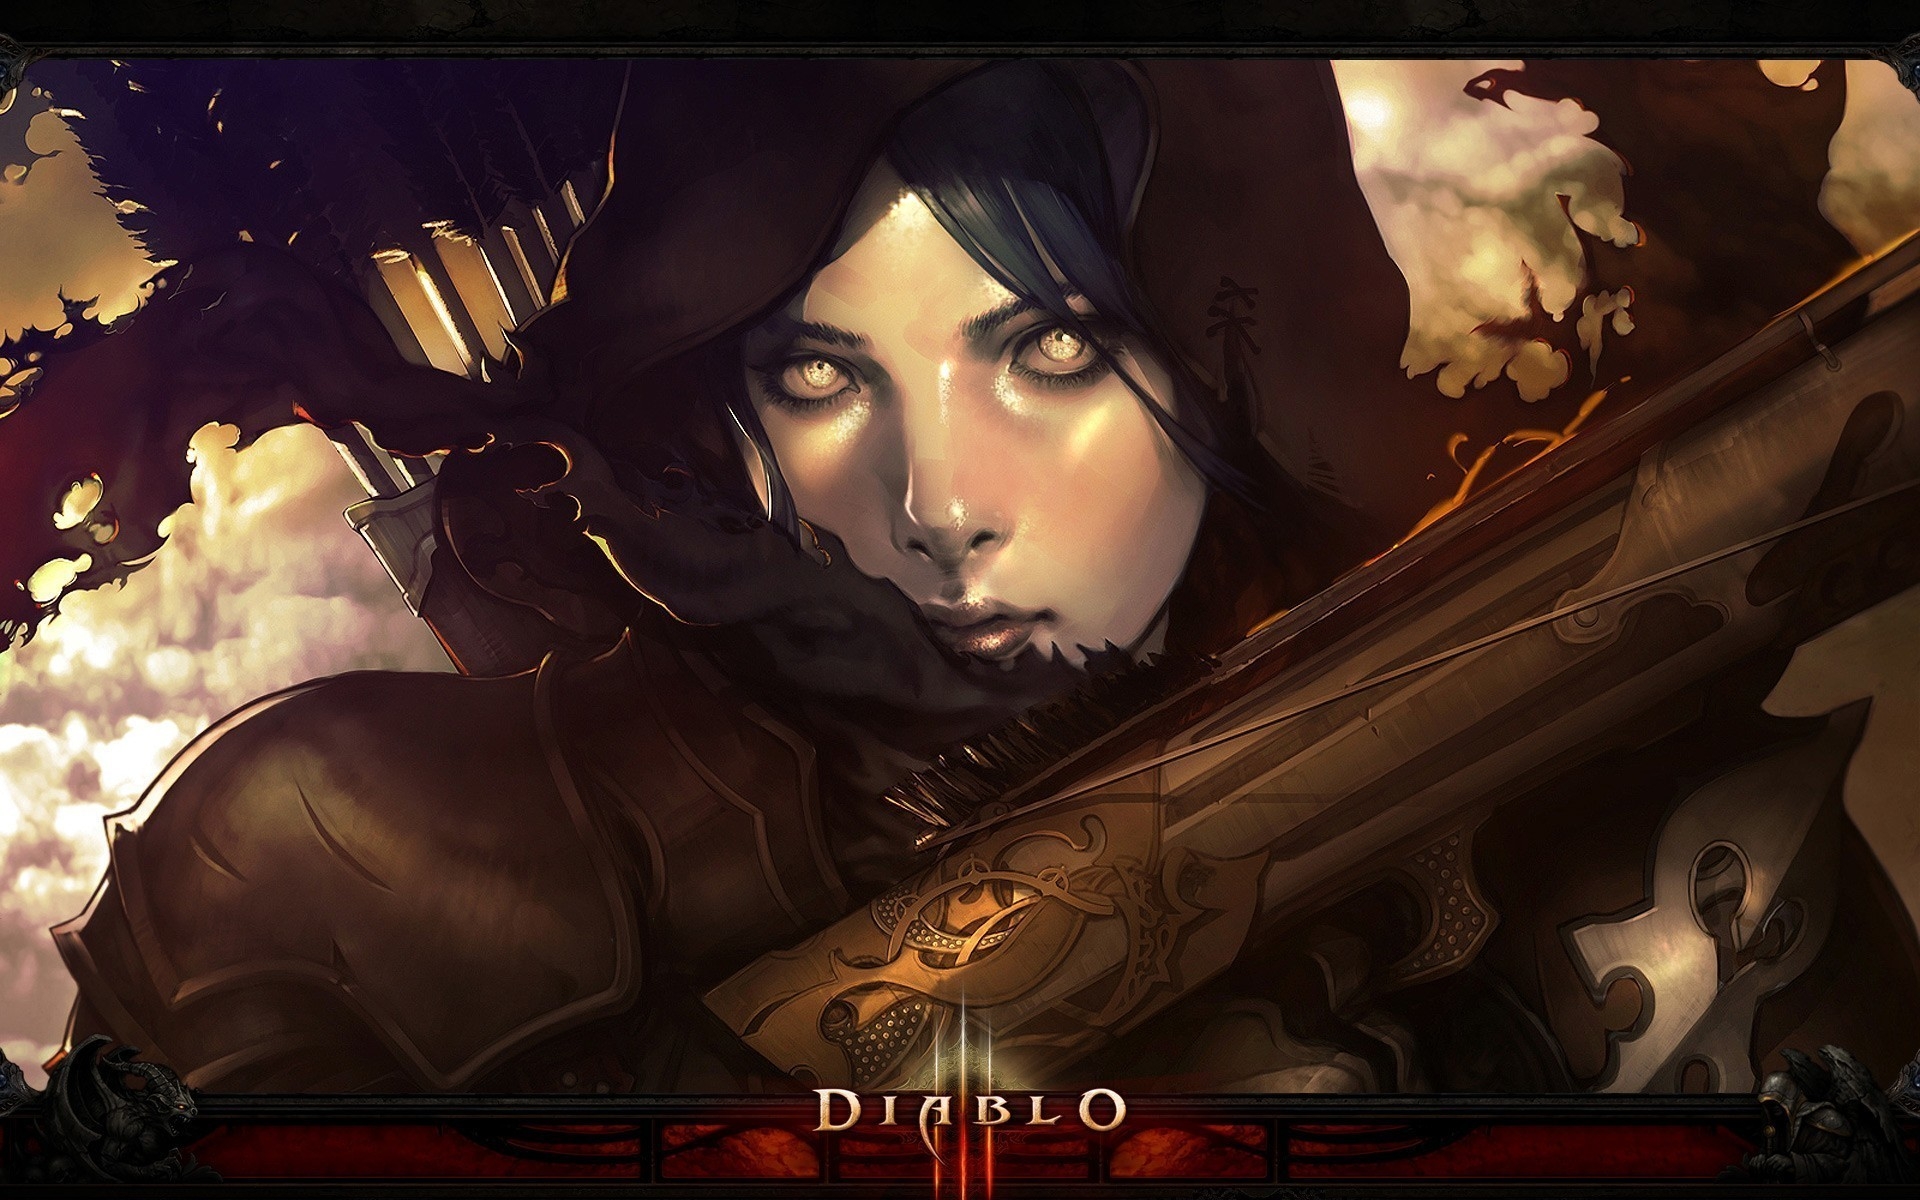 Diablo III Character for 1920 x 1200 widescreen resolution